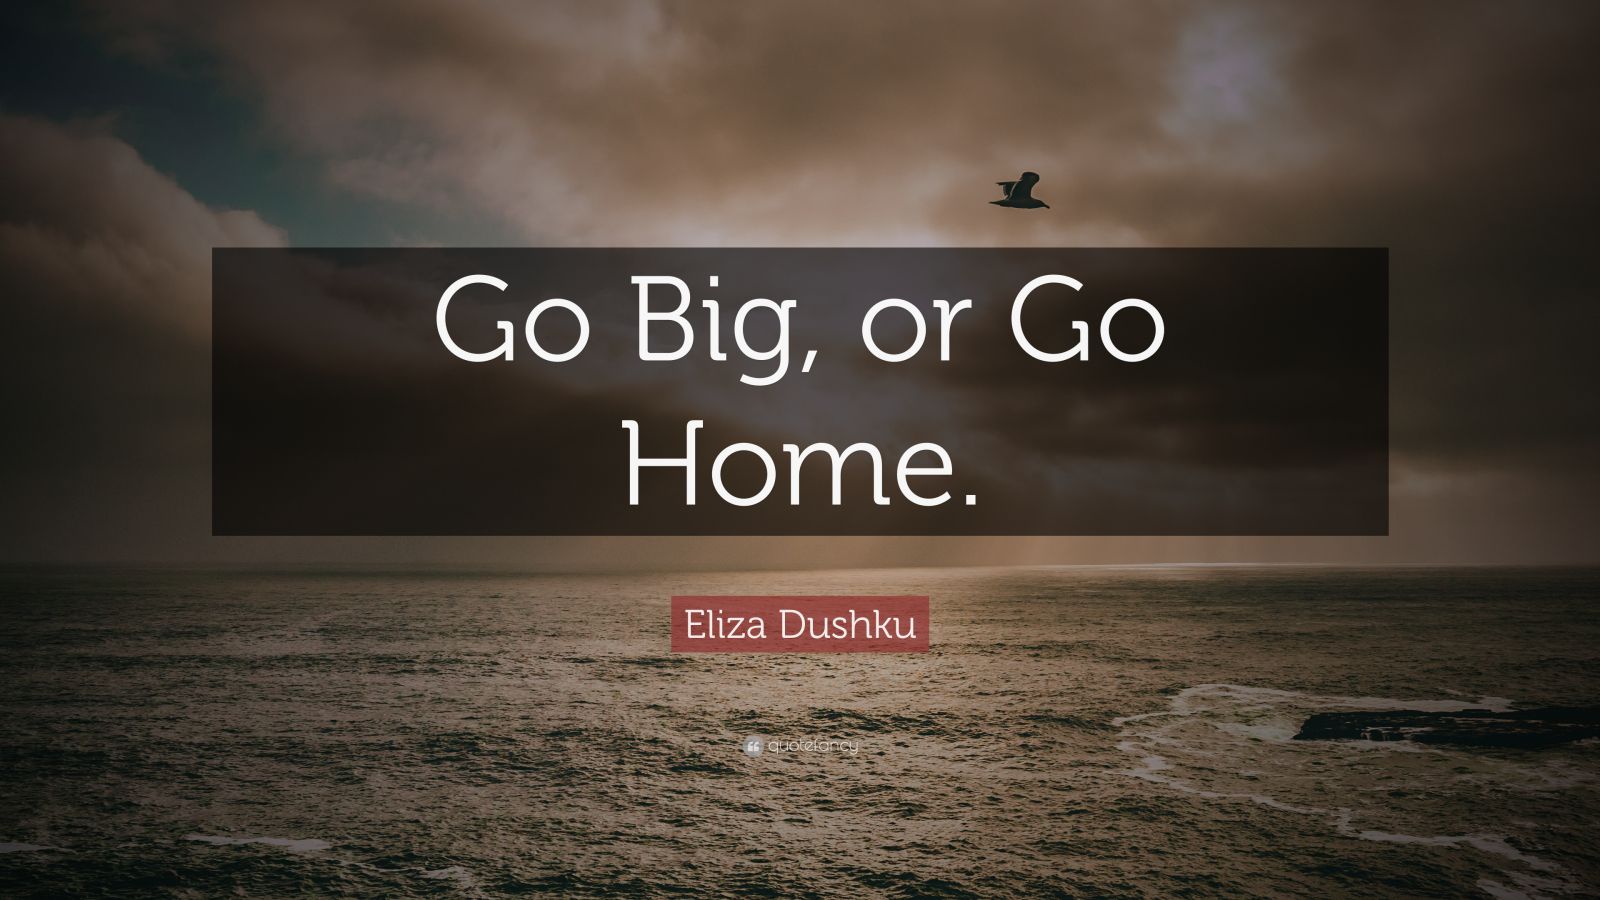 Go Big Or Go Home Origin Eliza Dushku Quote: “Go Big, or Go Home.” (22 wallpapers) - Quotefancy